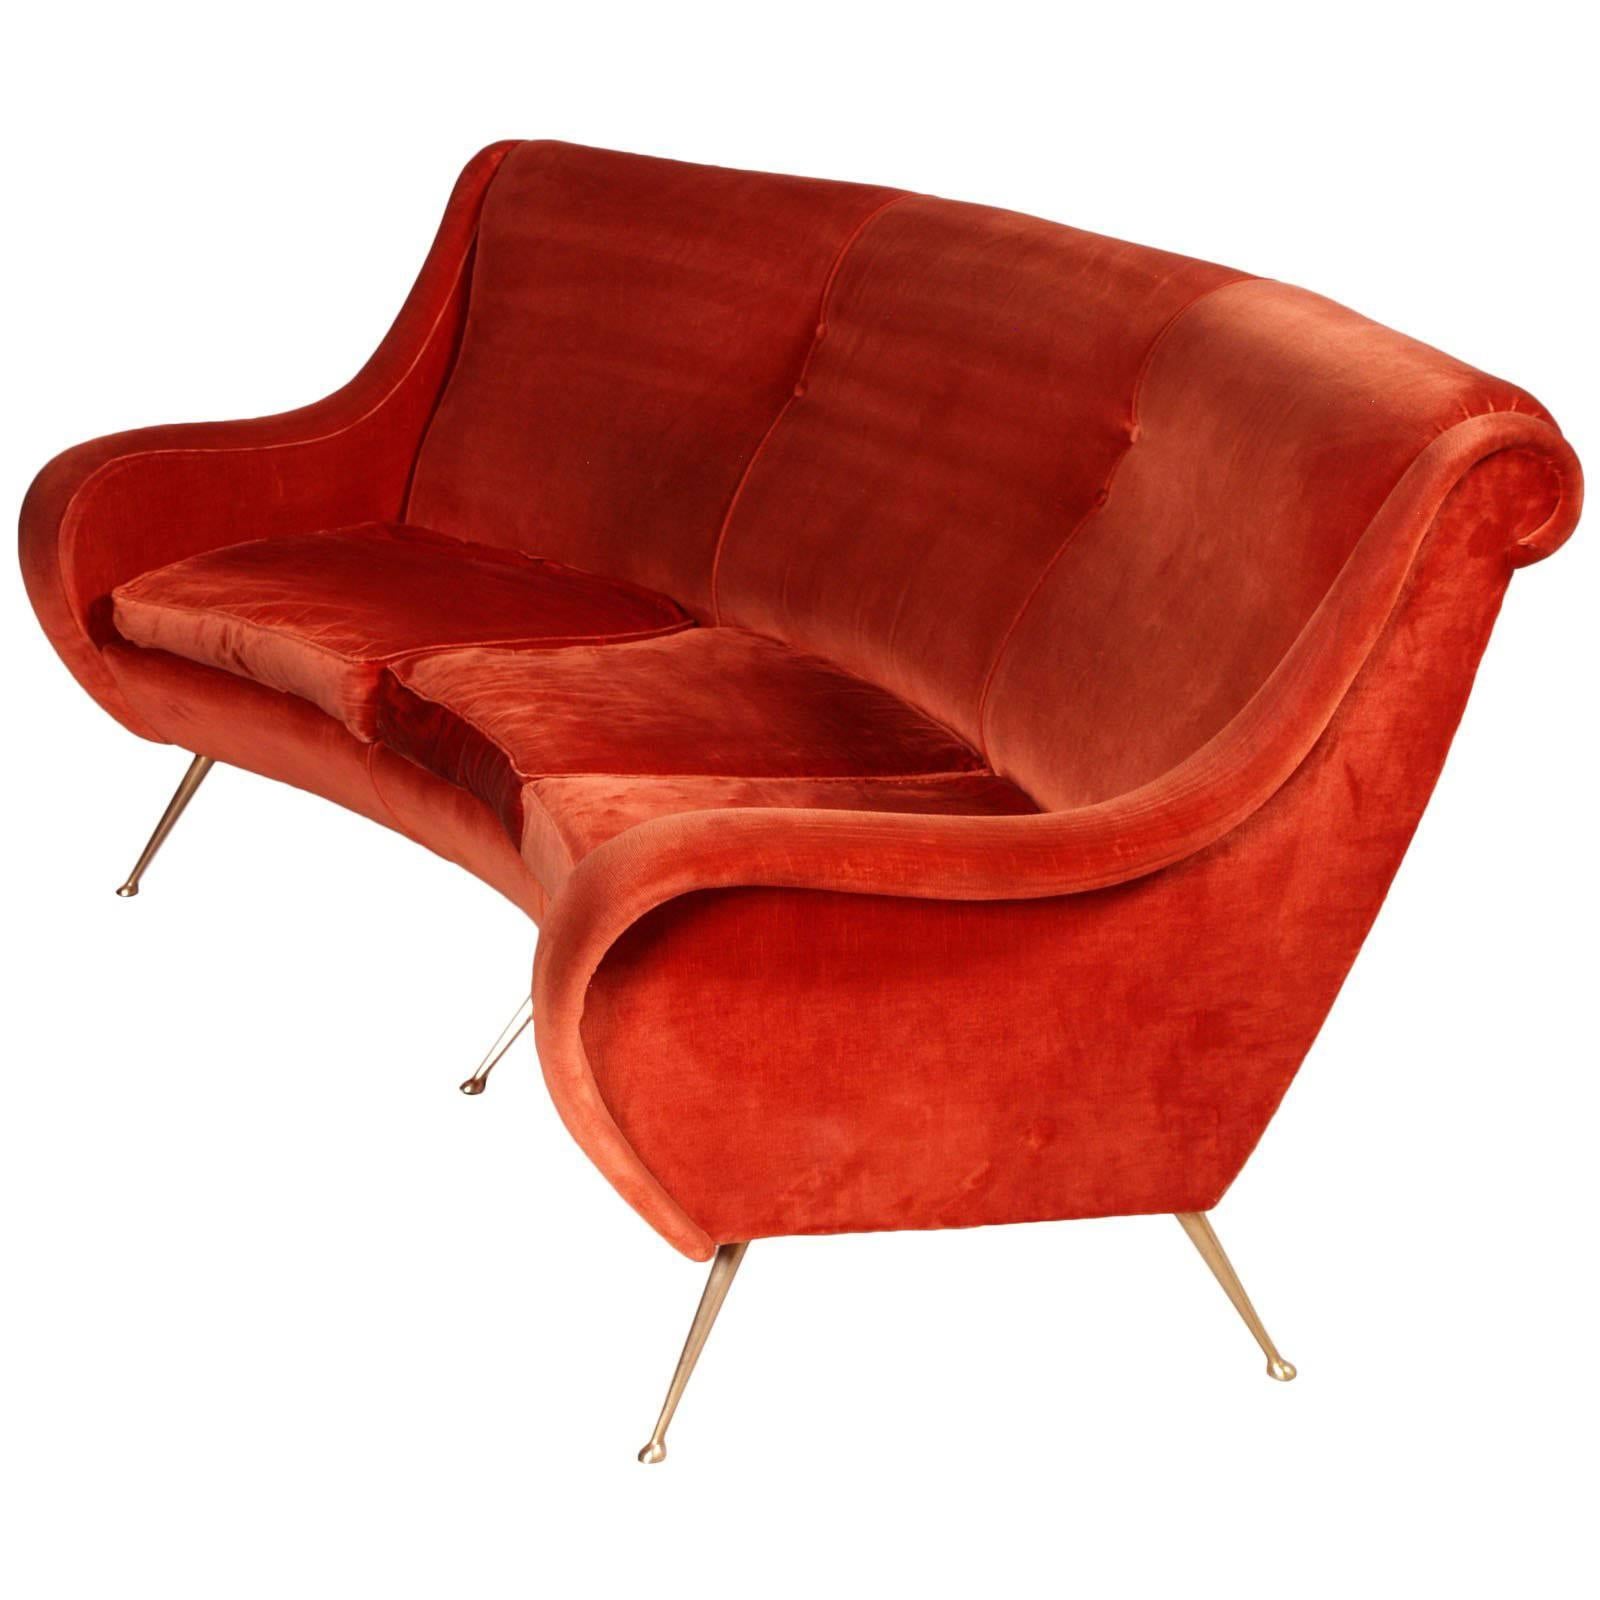 Three-Seat Curved Sofa Marco Zanuso design, Brass Legs Original Red Coral Velvet